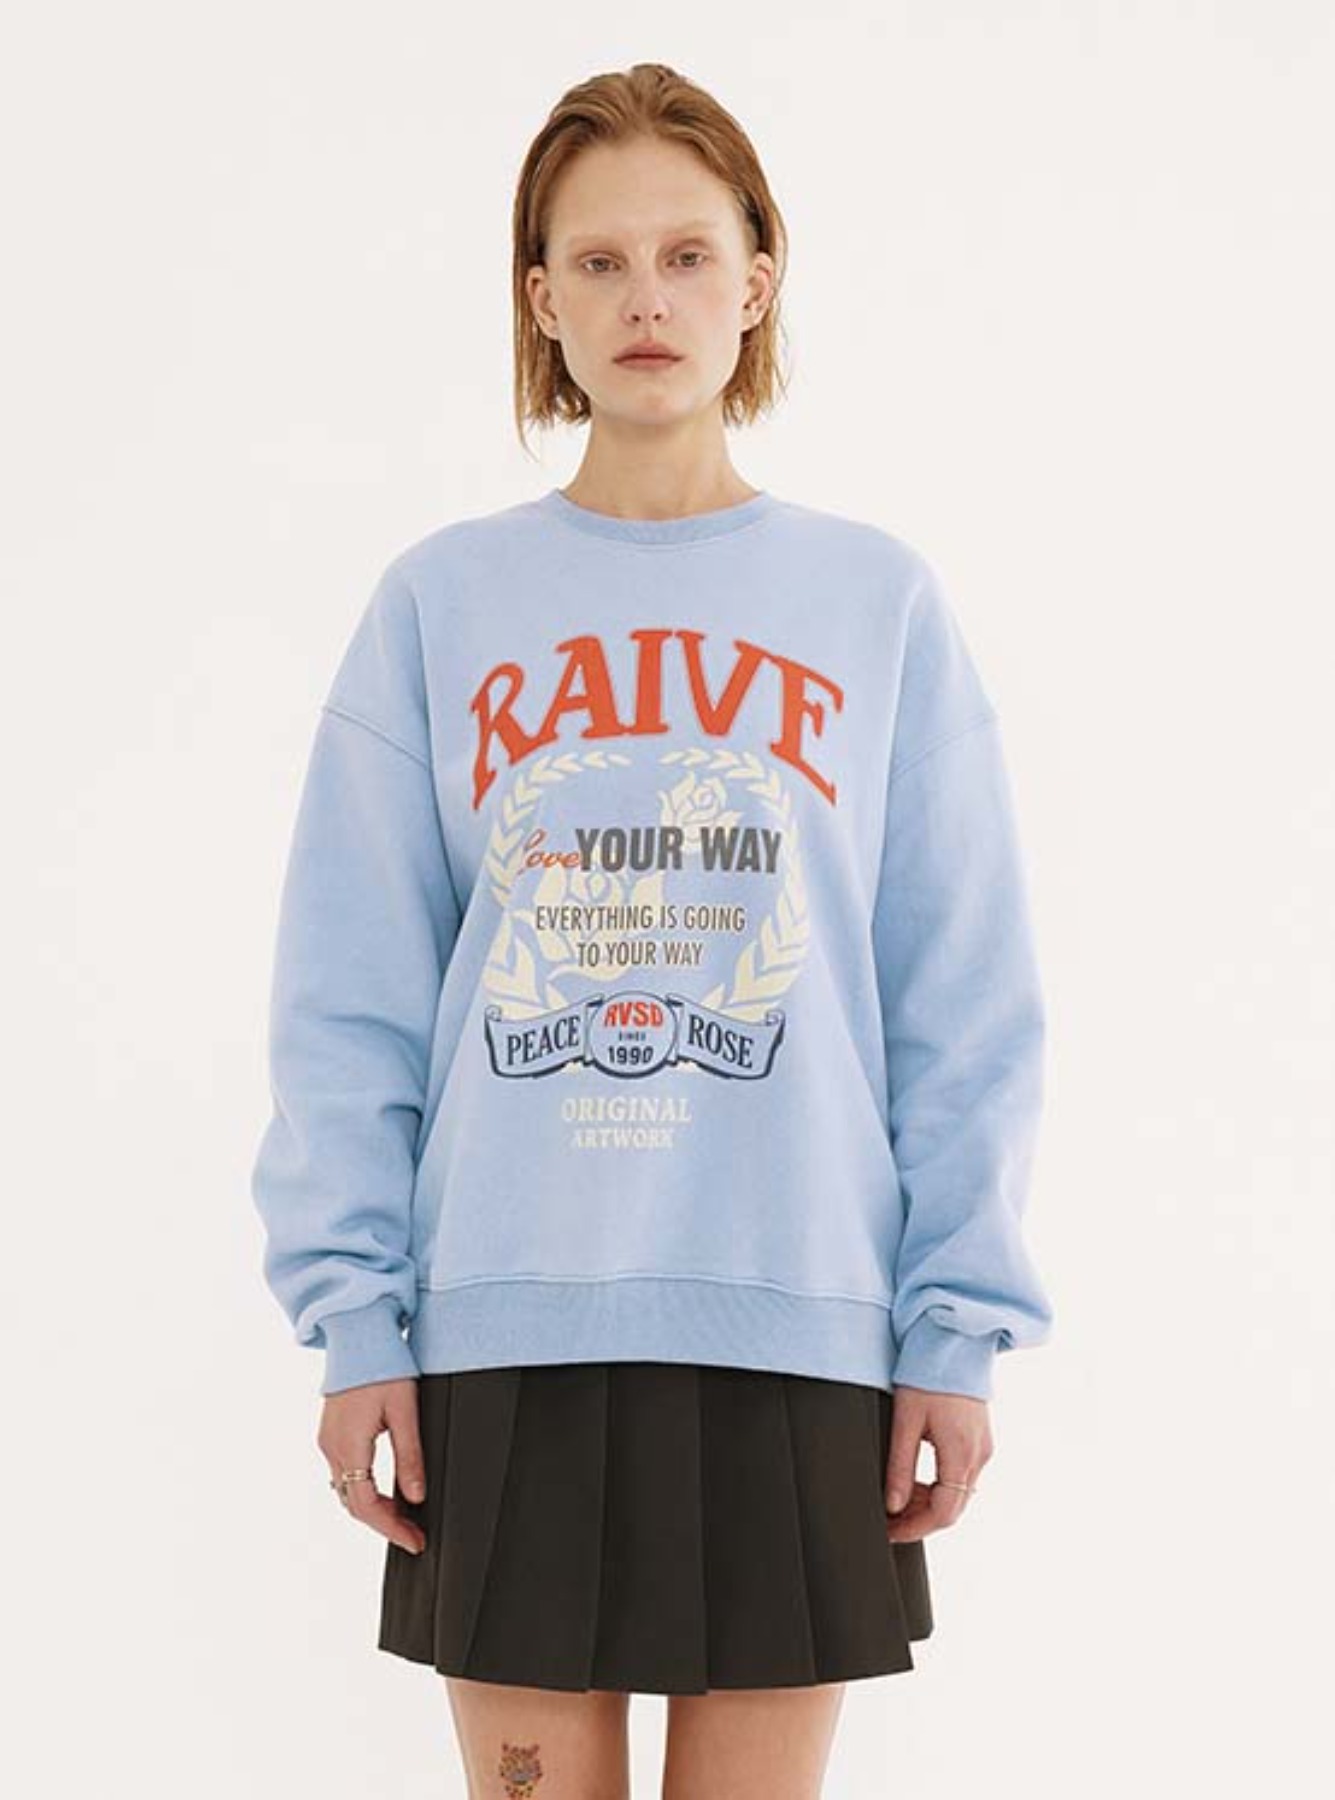 RAIVE Artwork Sweatshirt in Blue VW3SE253-22